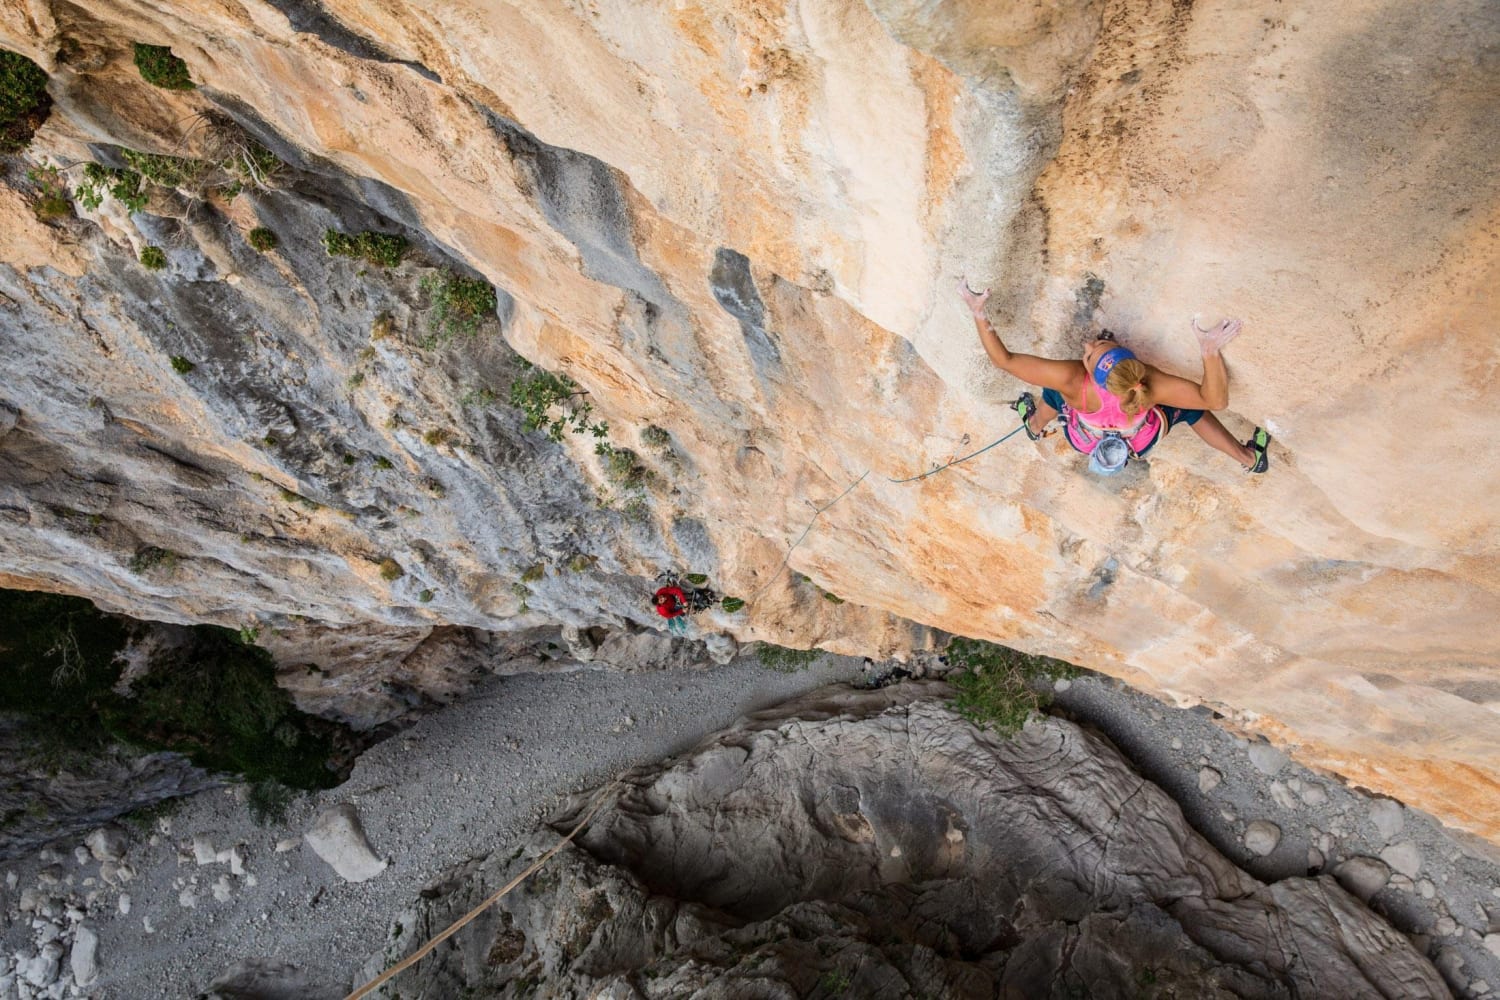 Sasha Digiulian Rock Climbing In Sardinia Italy